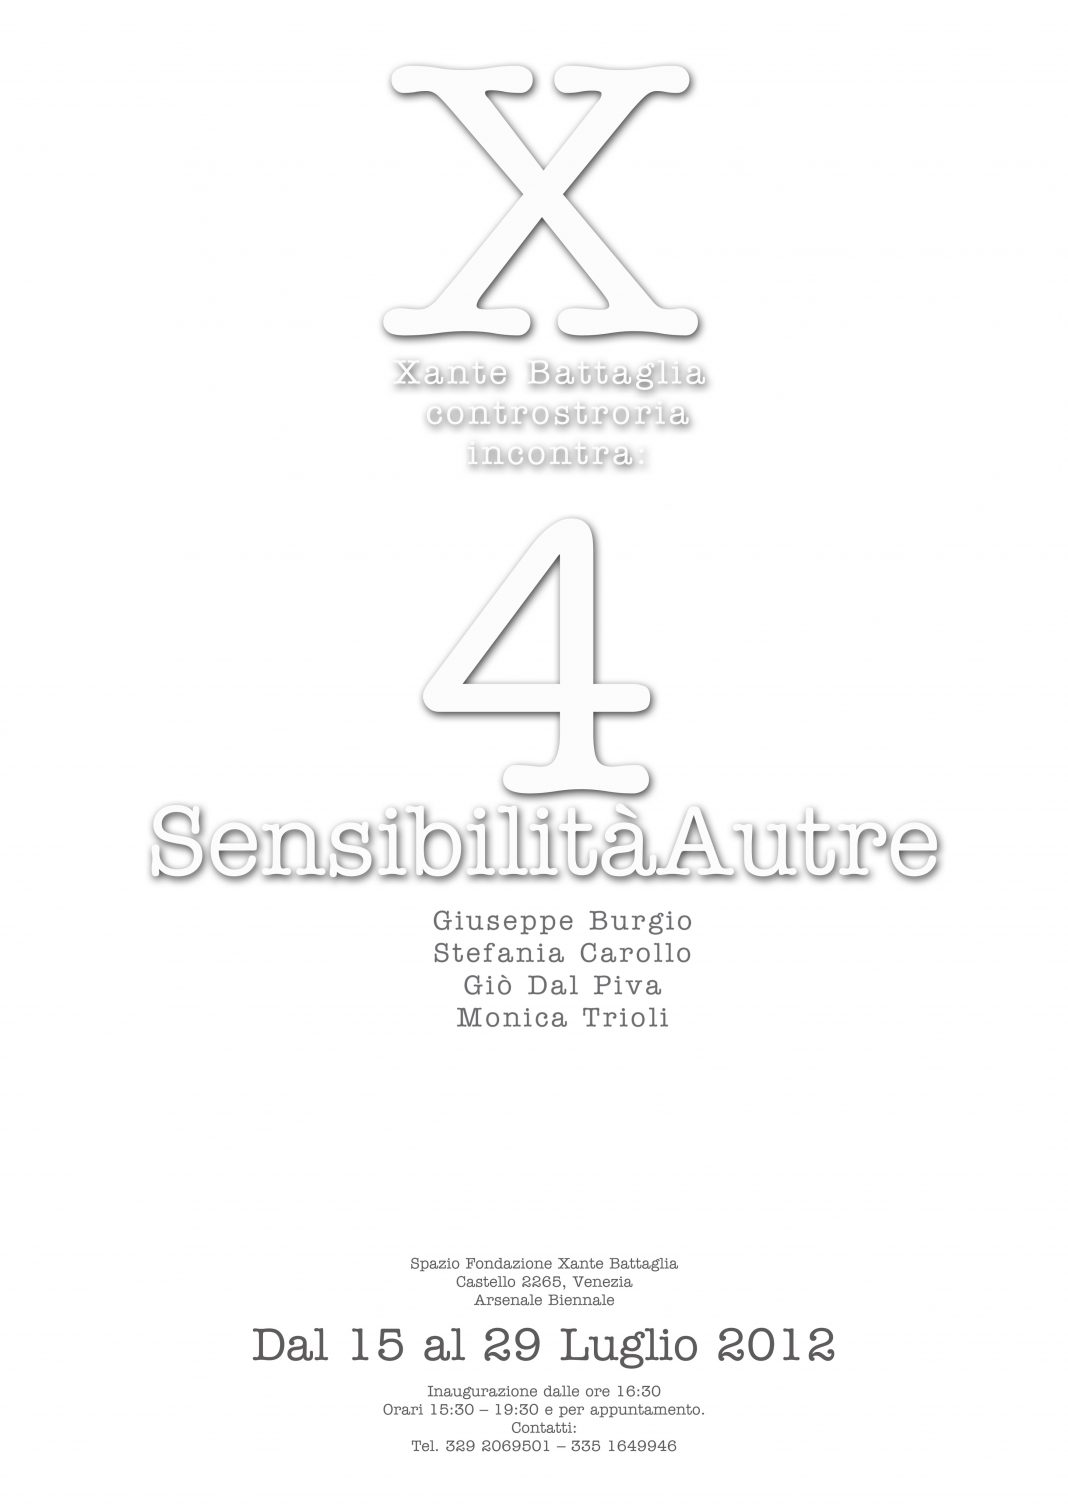 4 SENSIBILITA’ Autrehttps://www.exibart.com/repository/media/eventi/2012/07/4-sensibilita’-autre-1068x1510.jpg